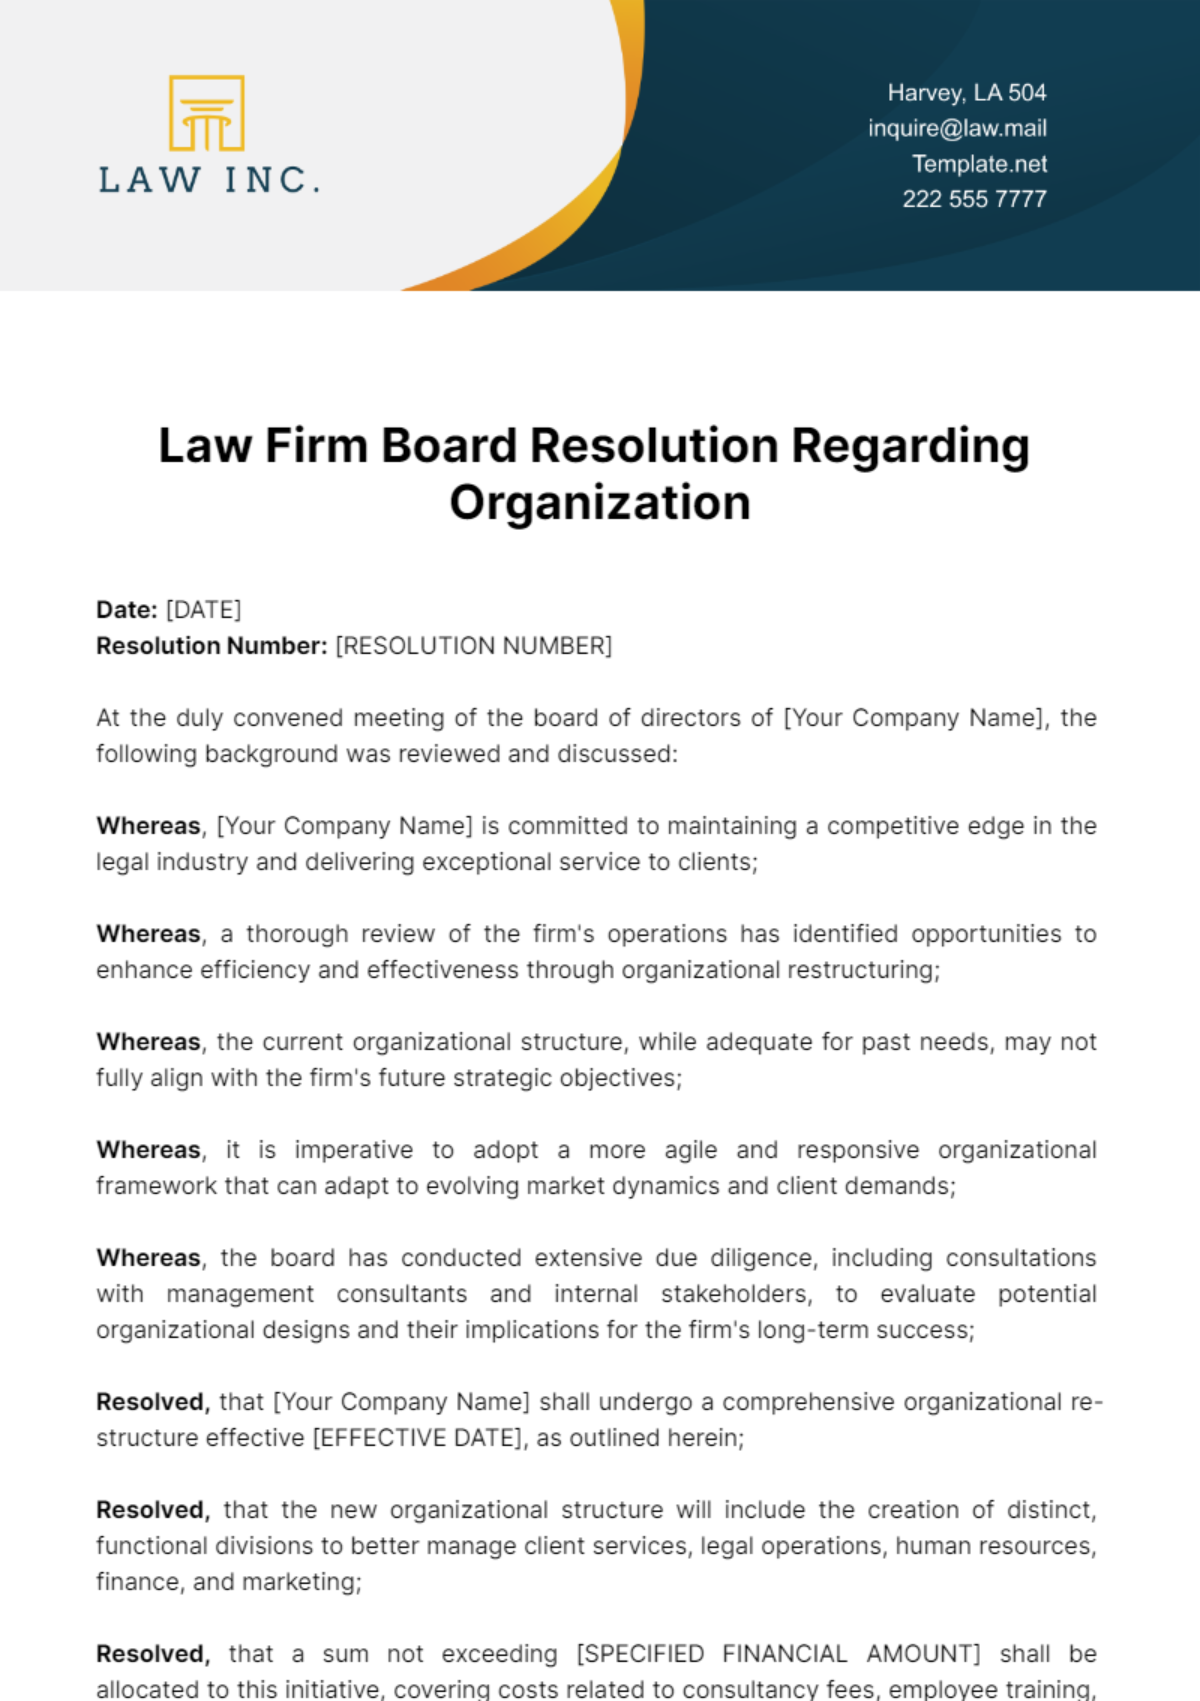 Law Firm Board Resolution Regarding Organization Template